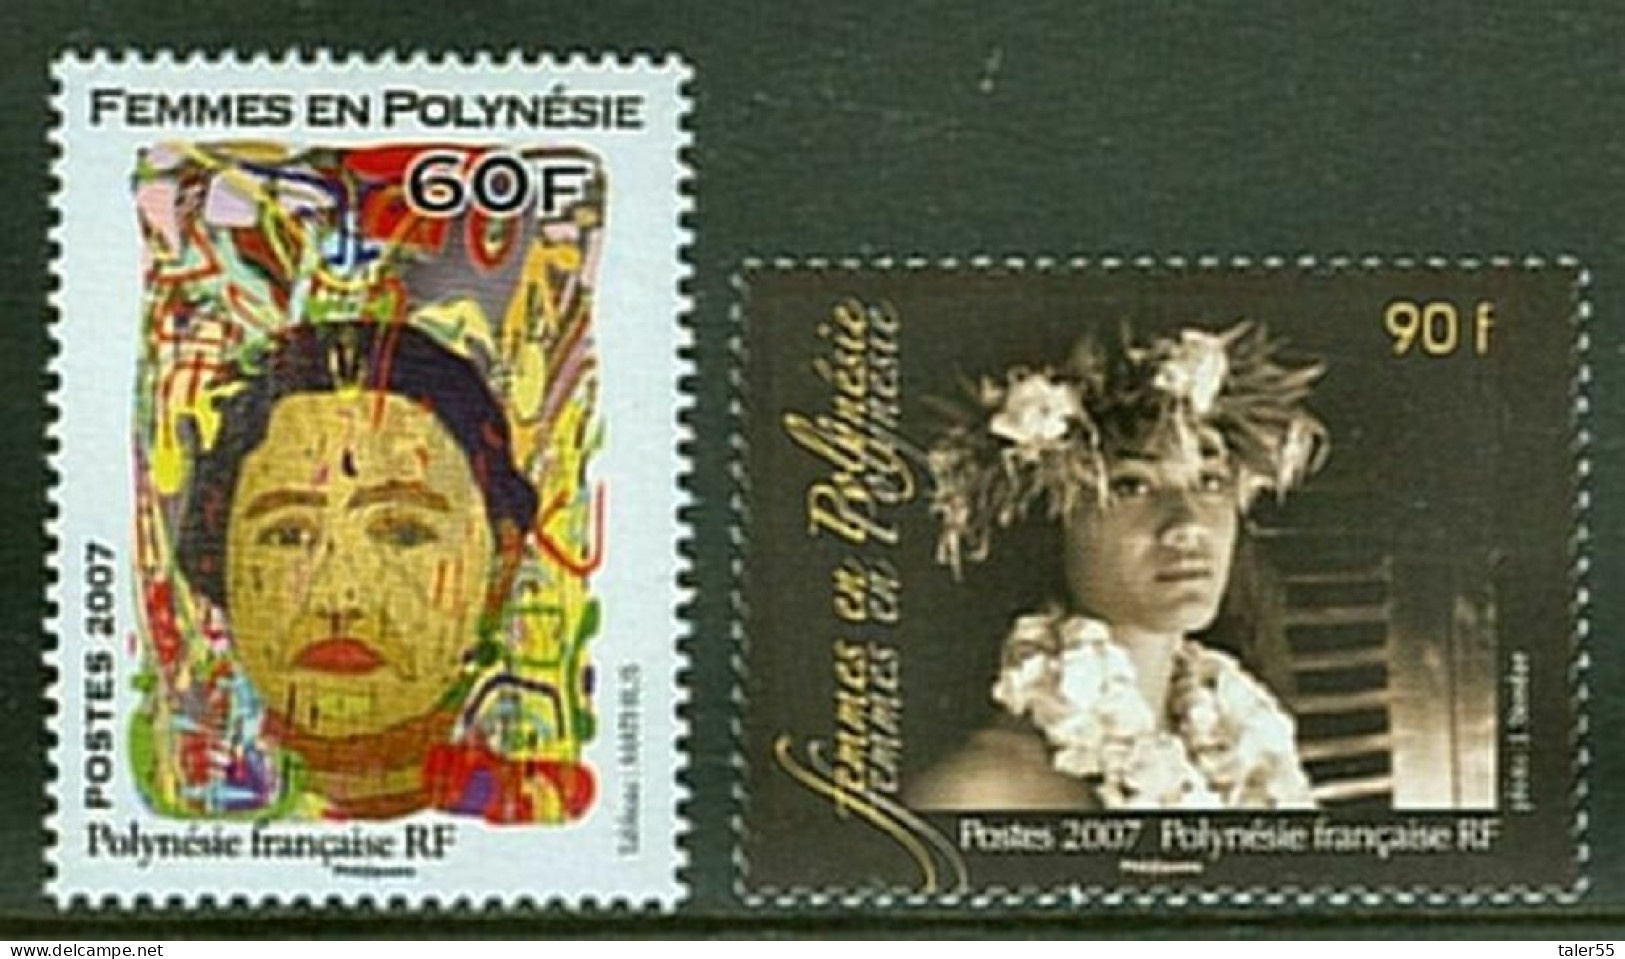 Fr. Polynesia Polynesian Women Painting Photography 2v 2007 MNH SG#1046-1047 - Nuevos